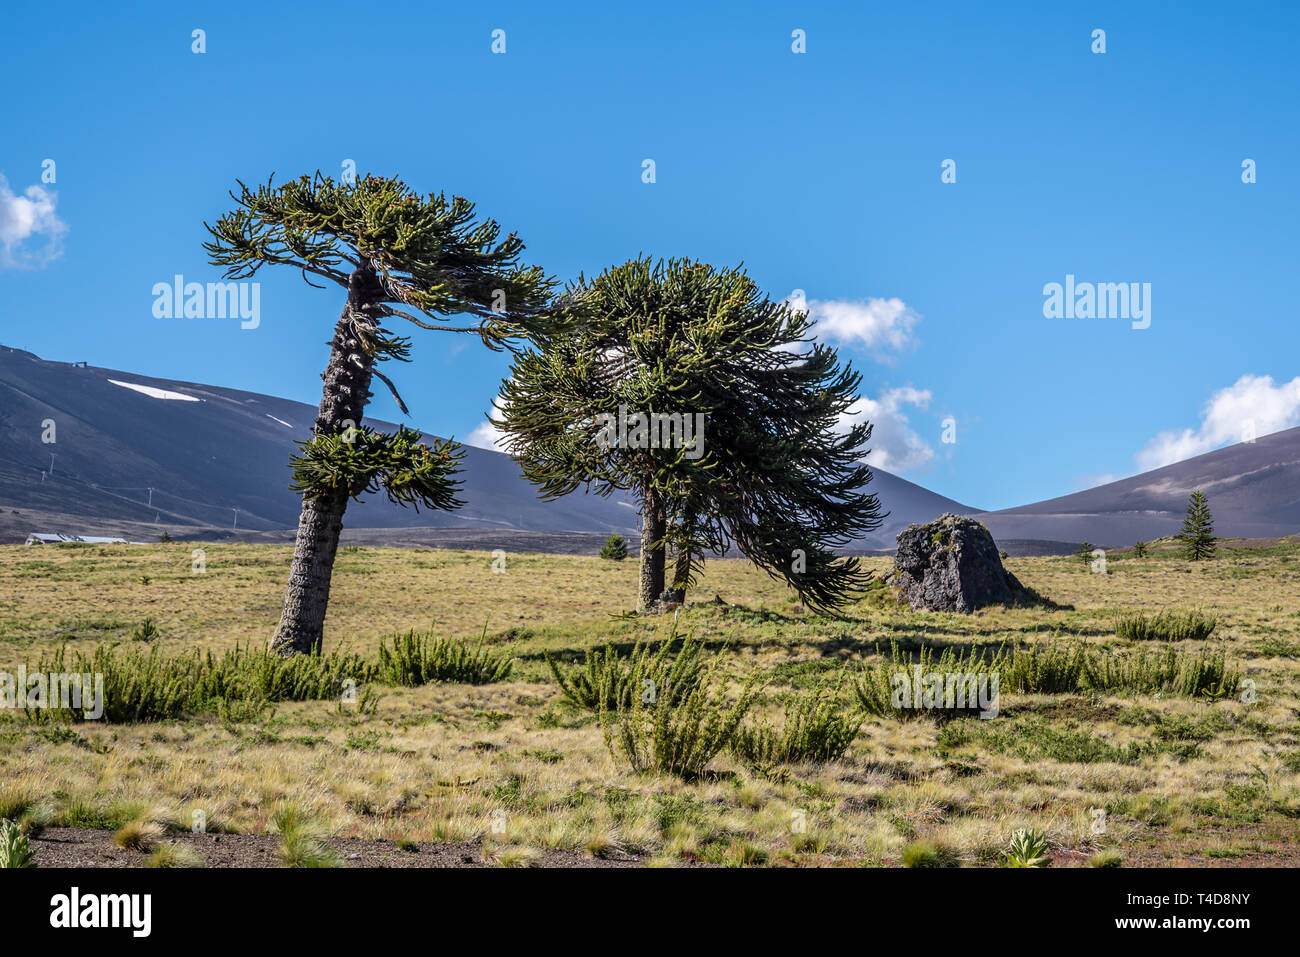 Die berühmtesten und ältesten Bäume Chiles, sterben Araukarien. Stockfoto